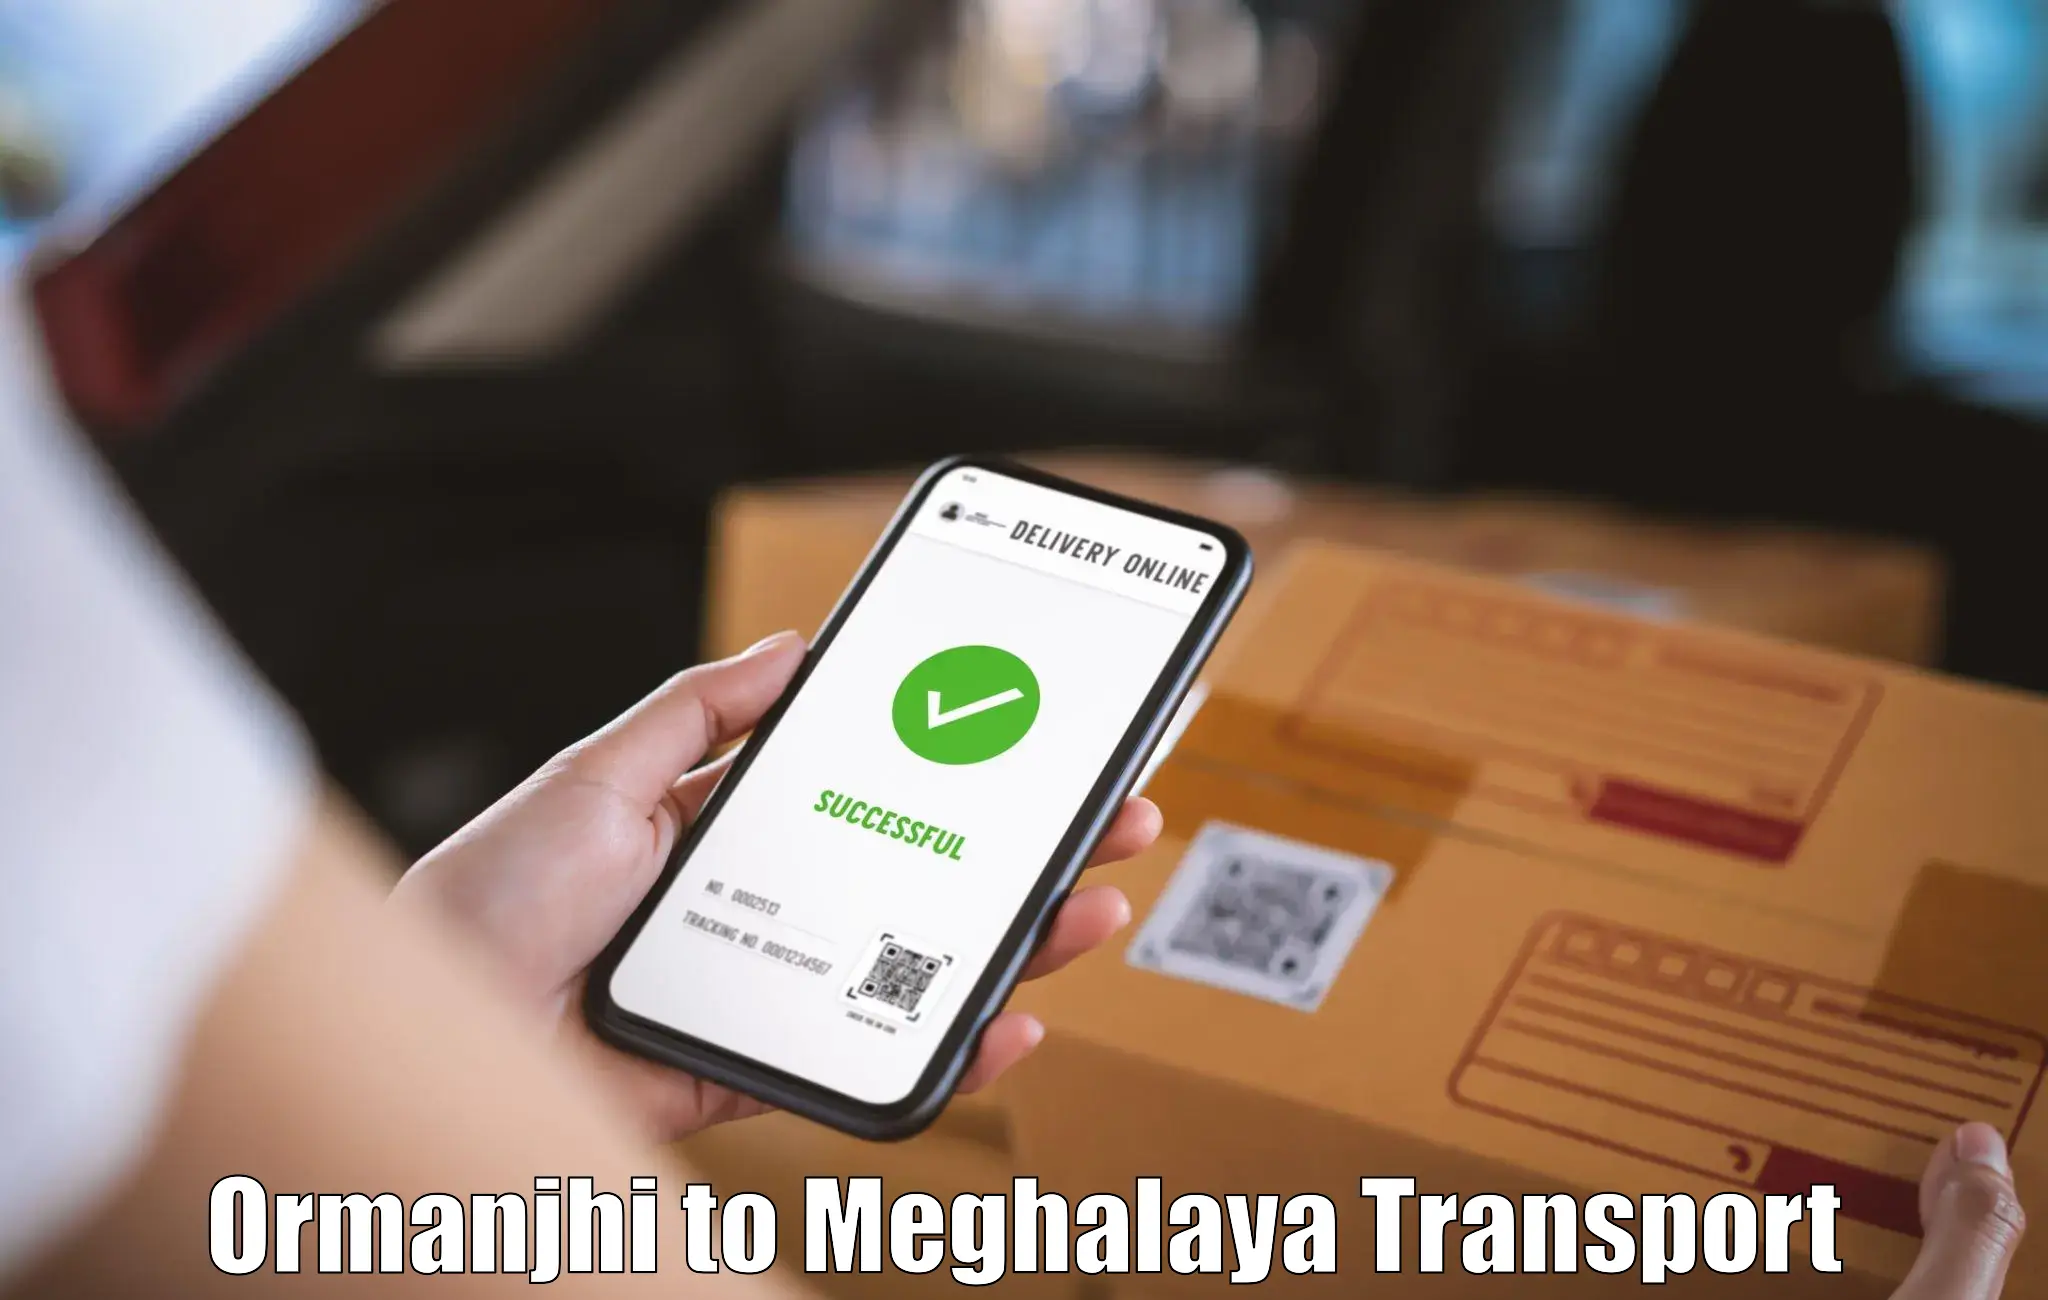 Nearby transport service Ormanjhi to Meghalaya